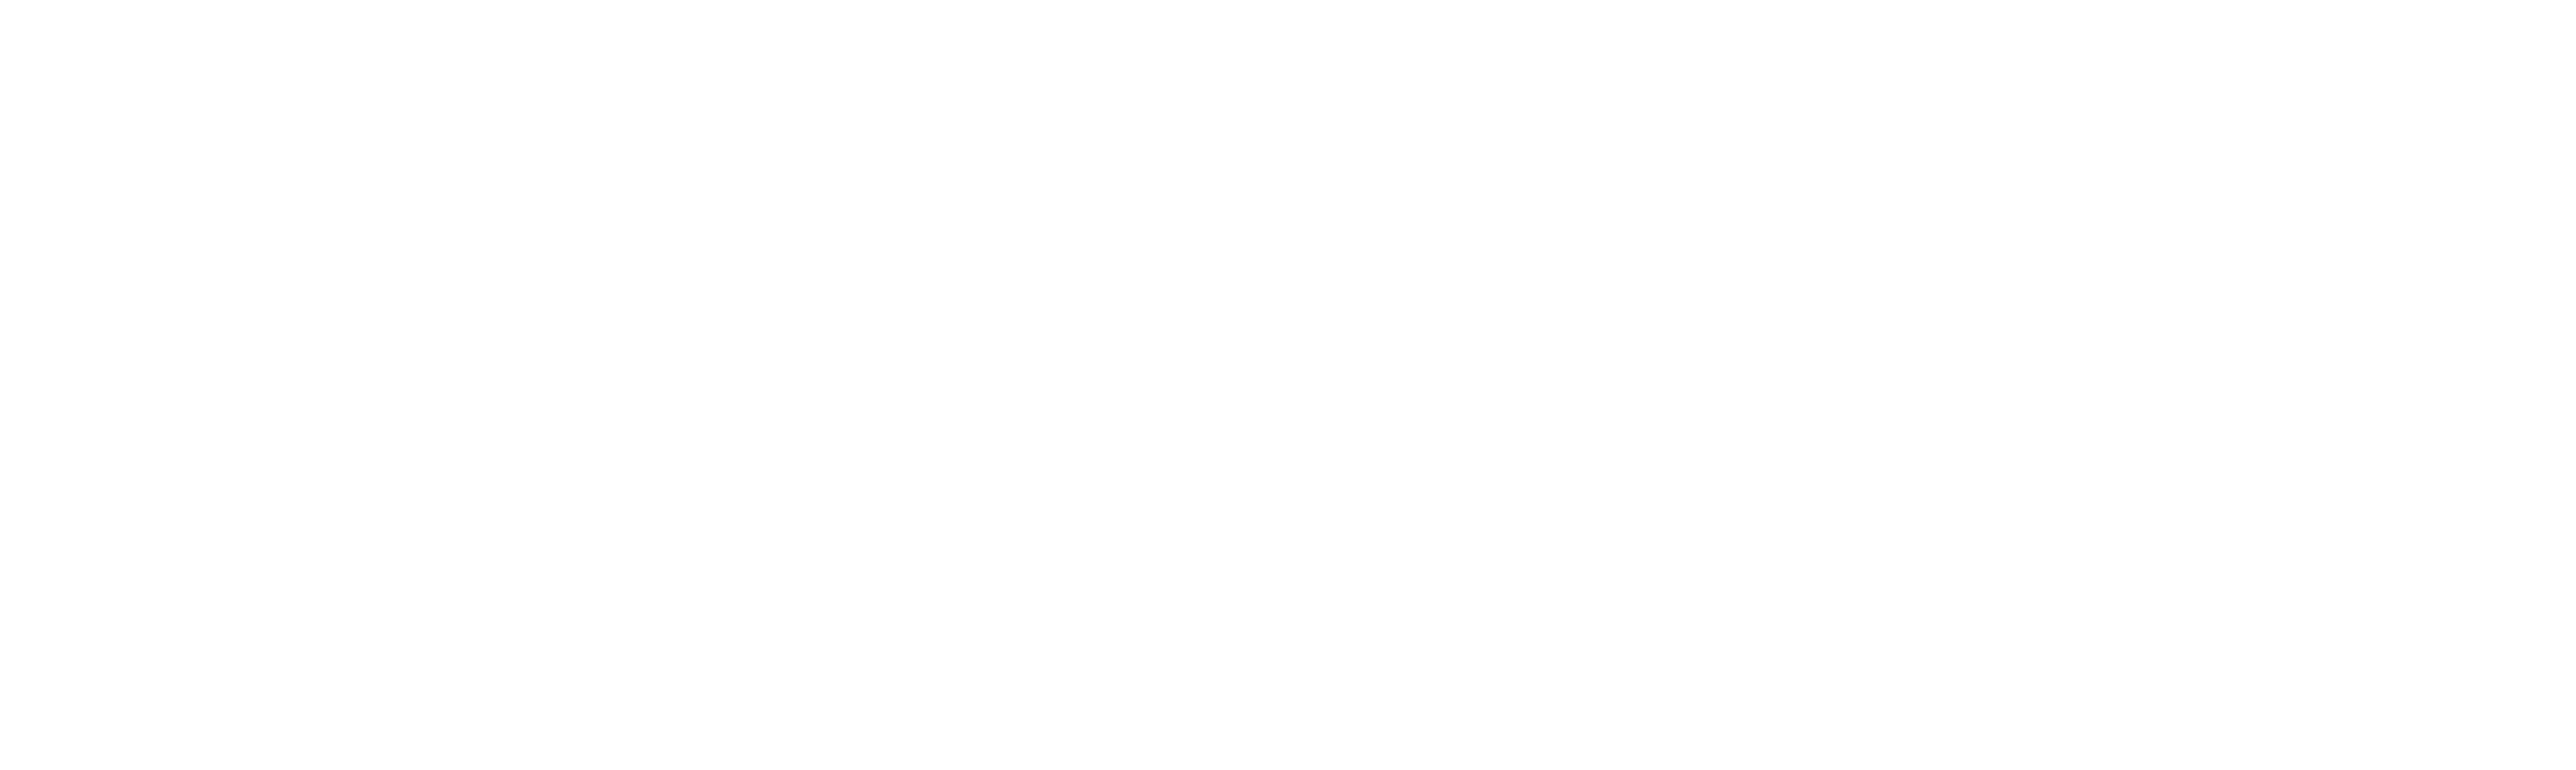 cegedim healthcare solution_logo white_-01-1